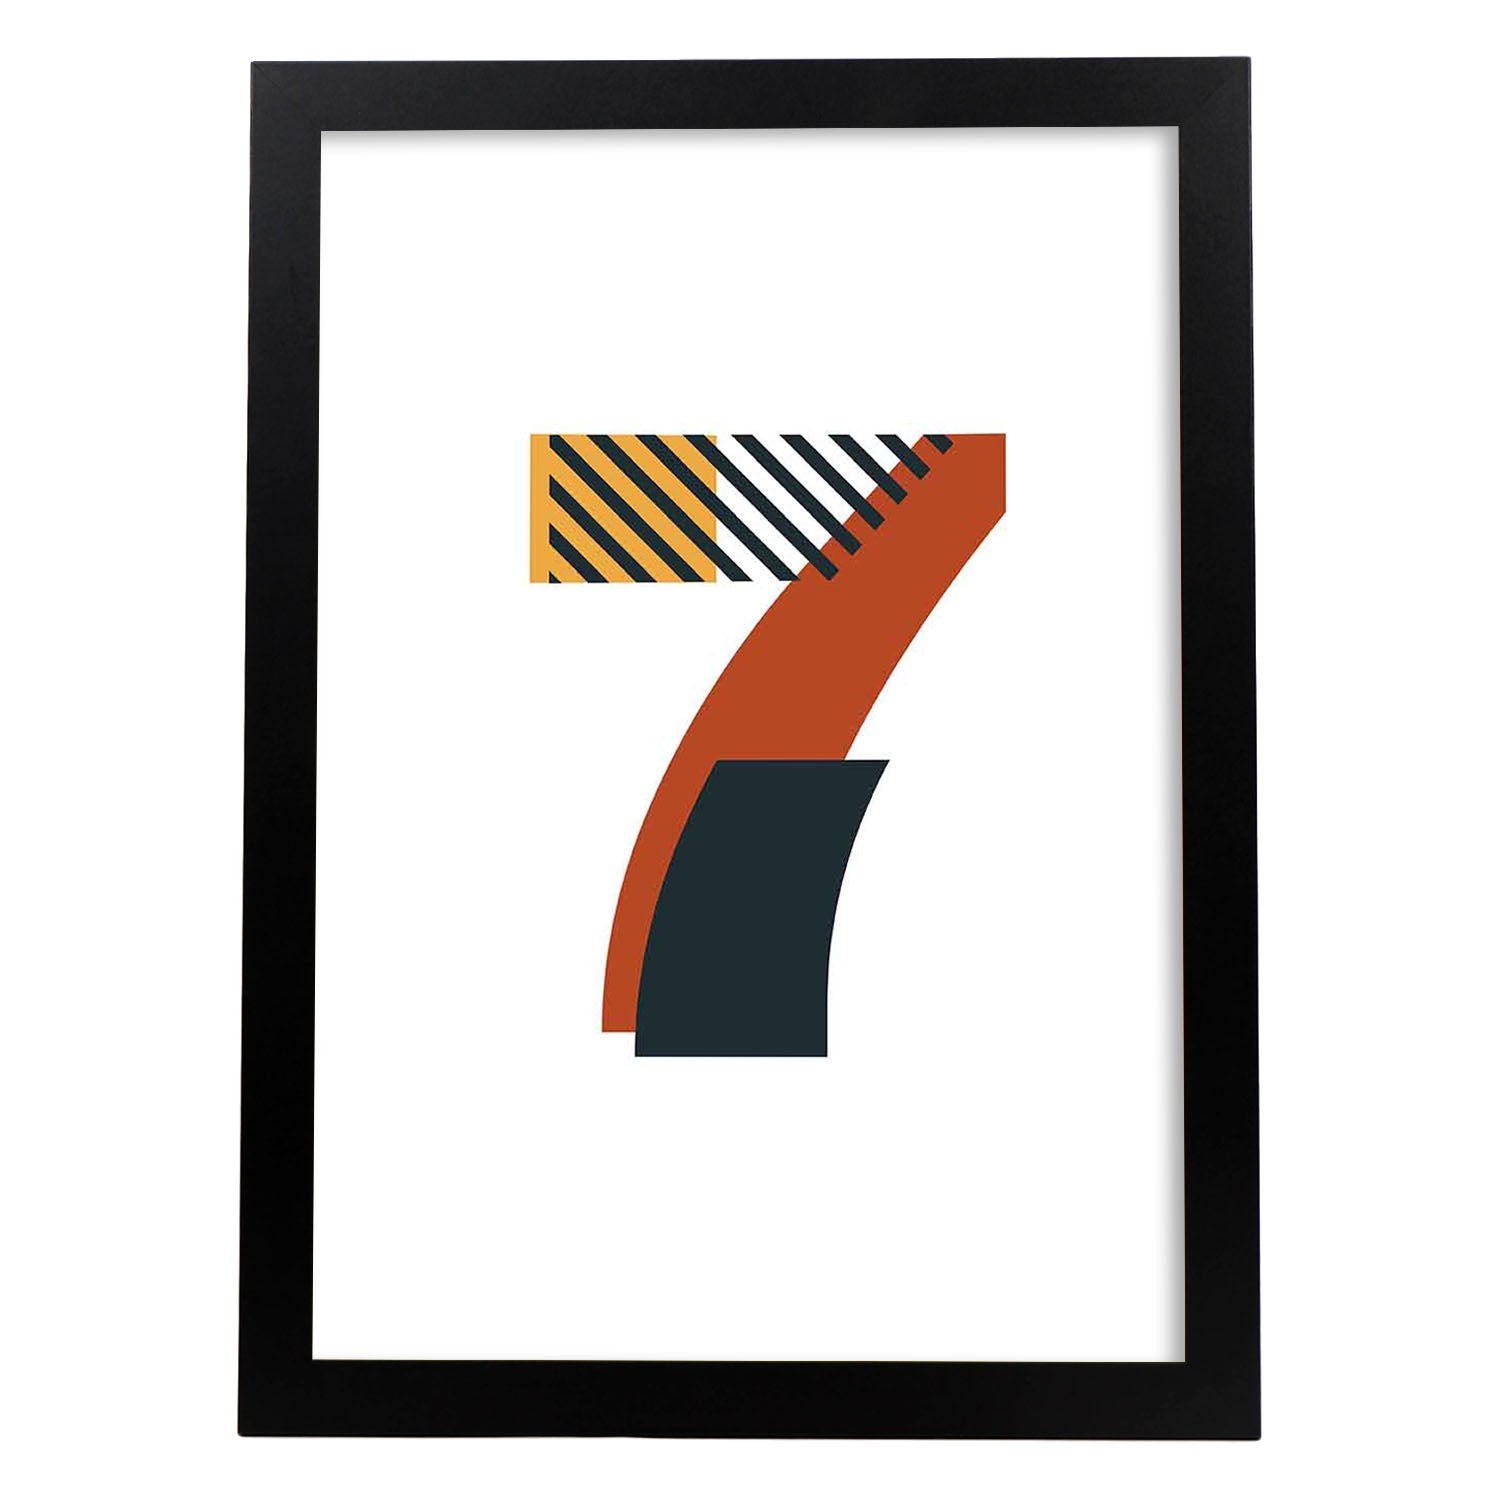 Poster de número 7. Lámina estilo Geometria con imágenes del alfabeto.-Artwork-Nacnic-A4-Marco Negro-Nacnic Estudio SL